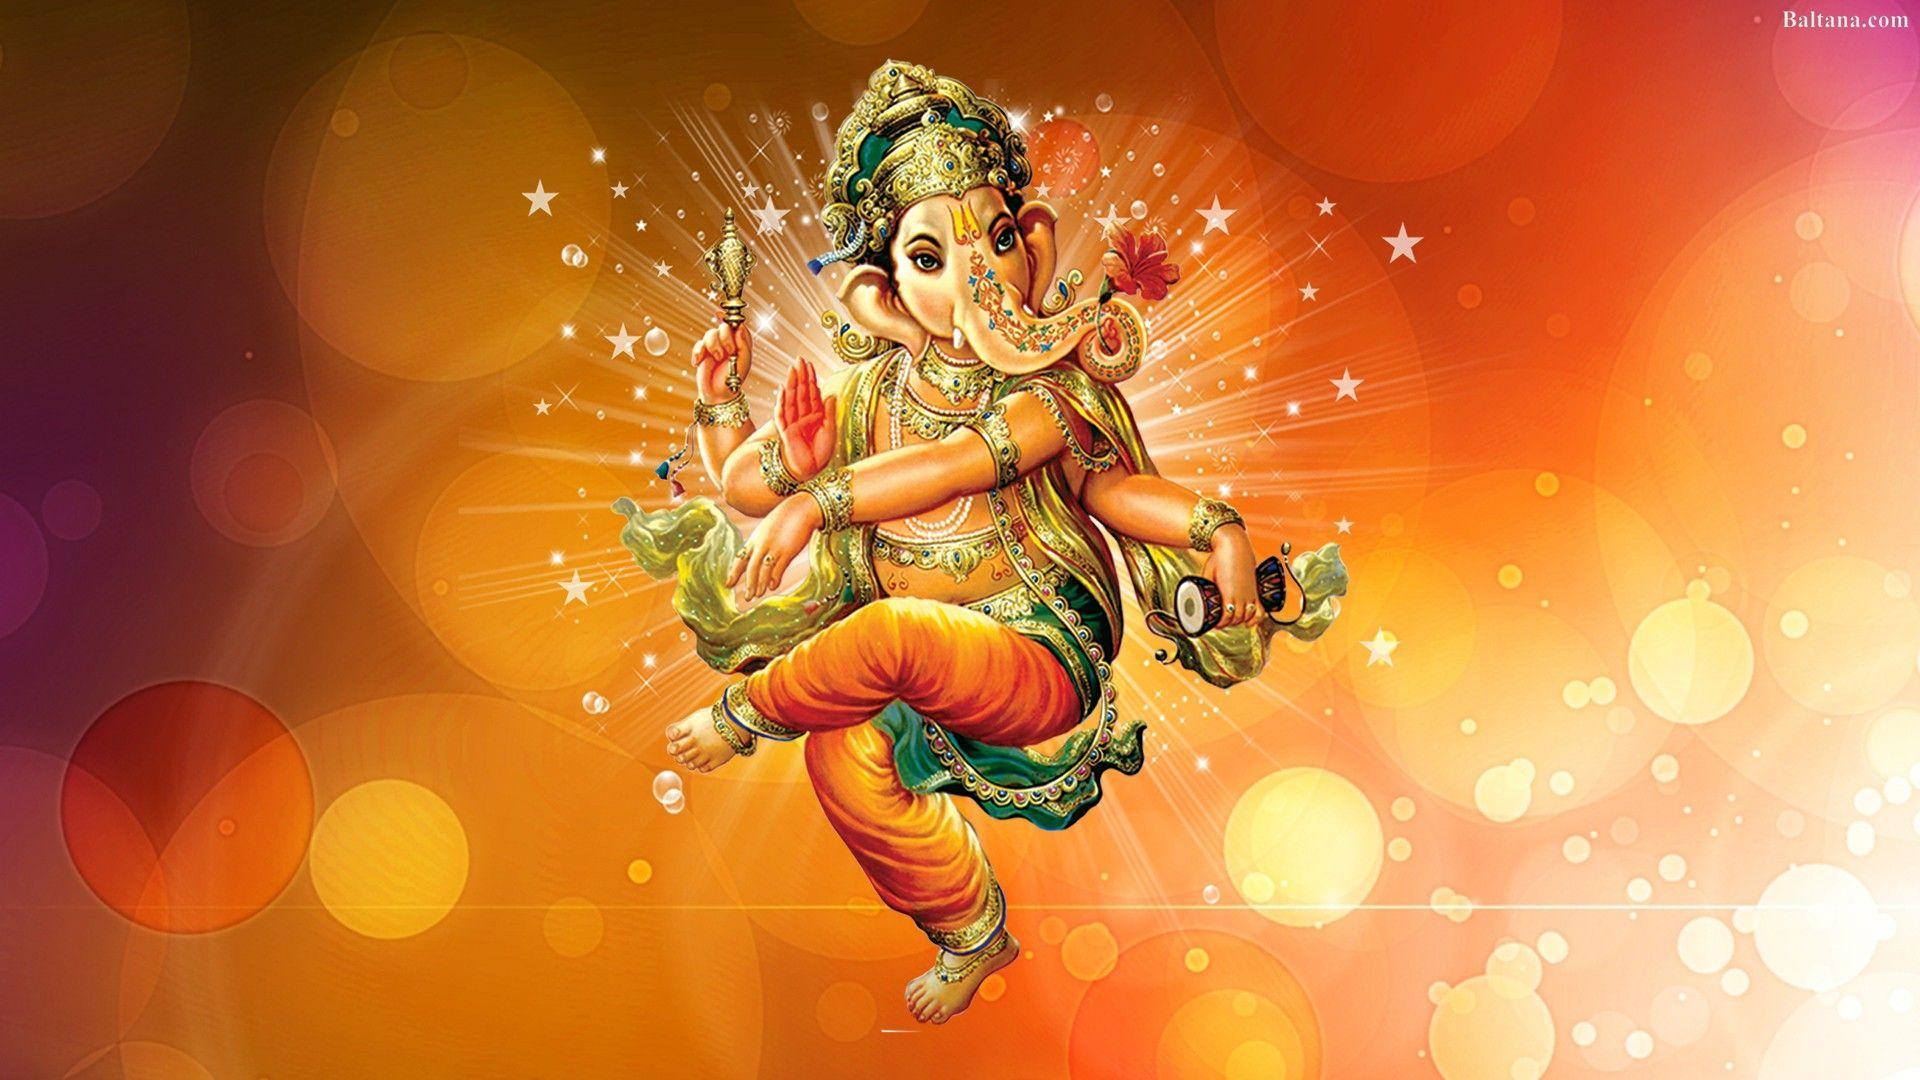 Ganesh Desktop Wallpapers - Top Free Ganesh Desktop Backgrounds ...